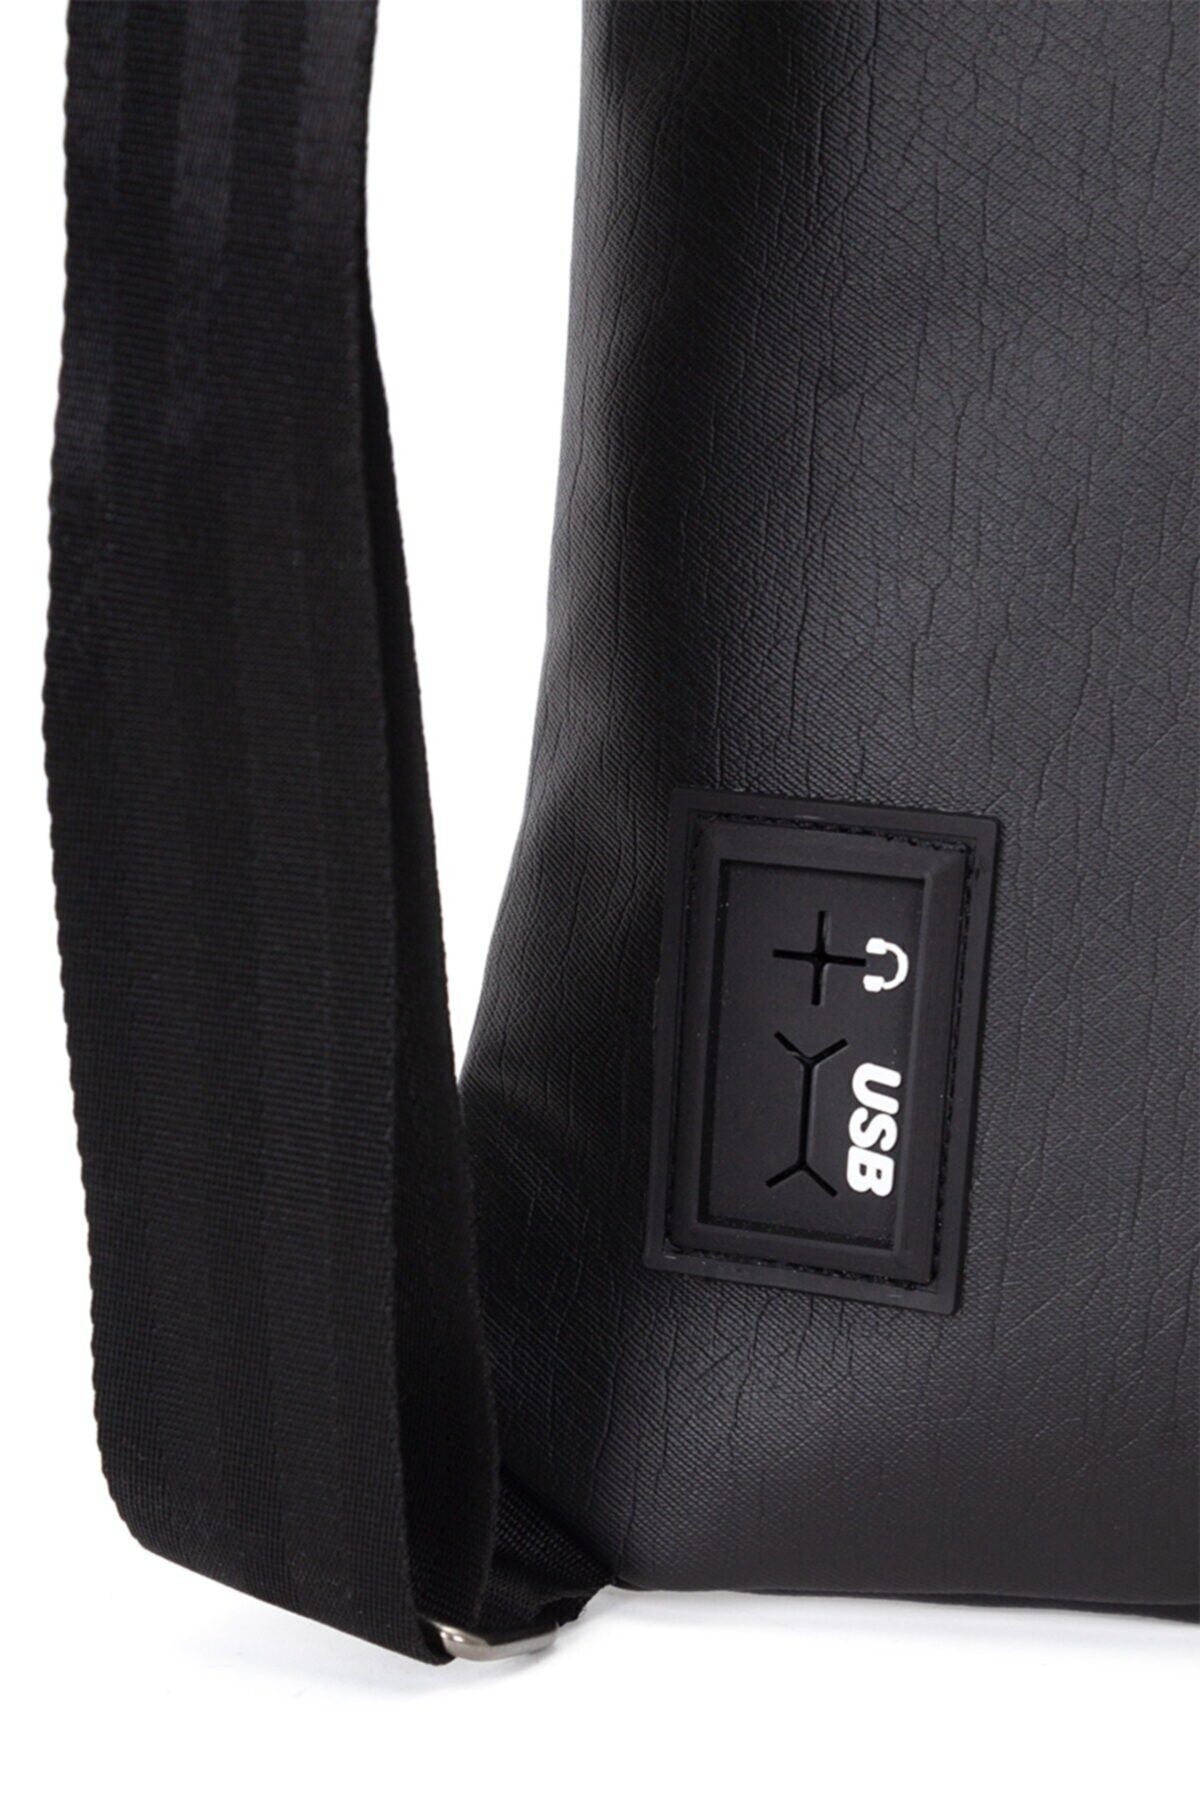 Men's Black Cross Shoulder Chest Bag Headphone And Usb Outlet Water Resistant Single Arm Bag